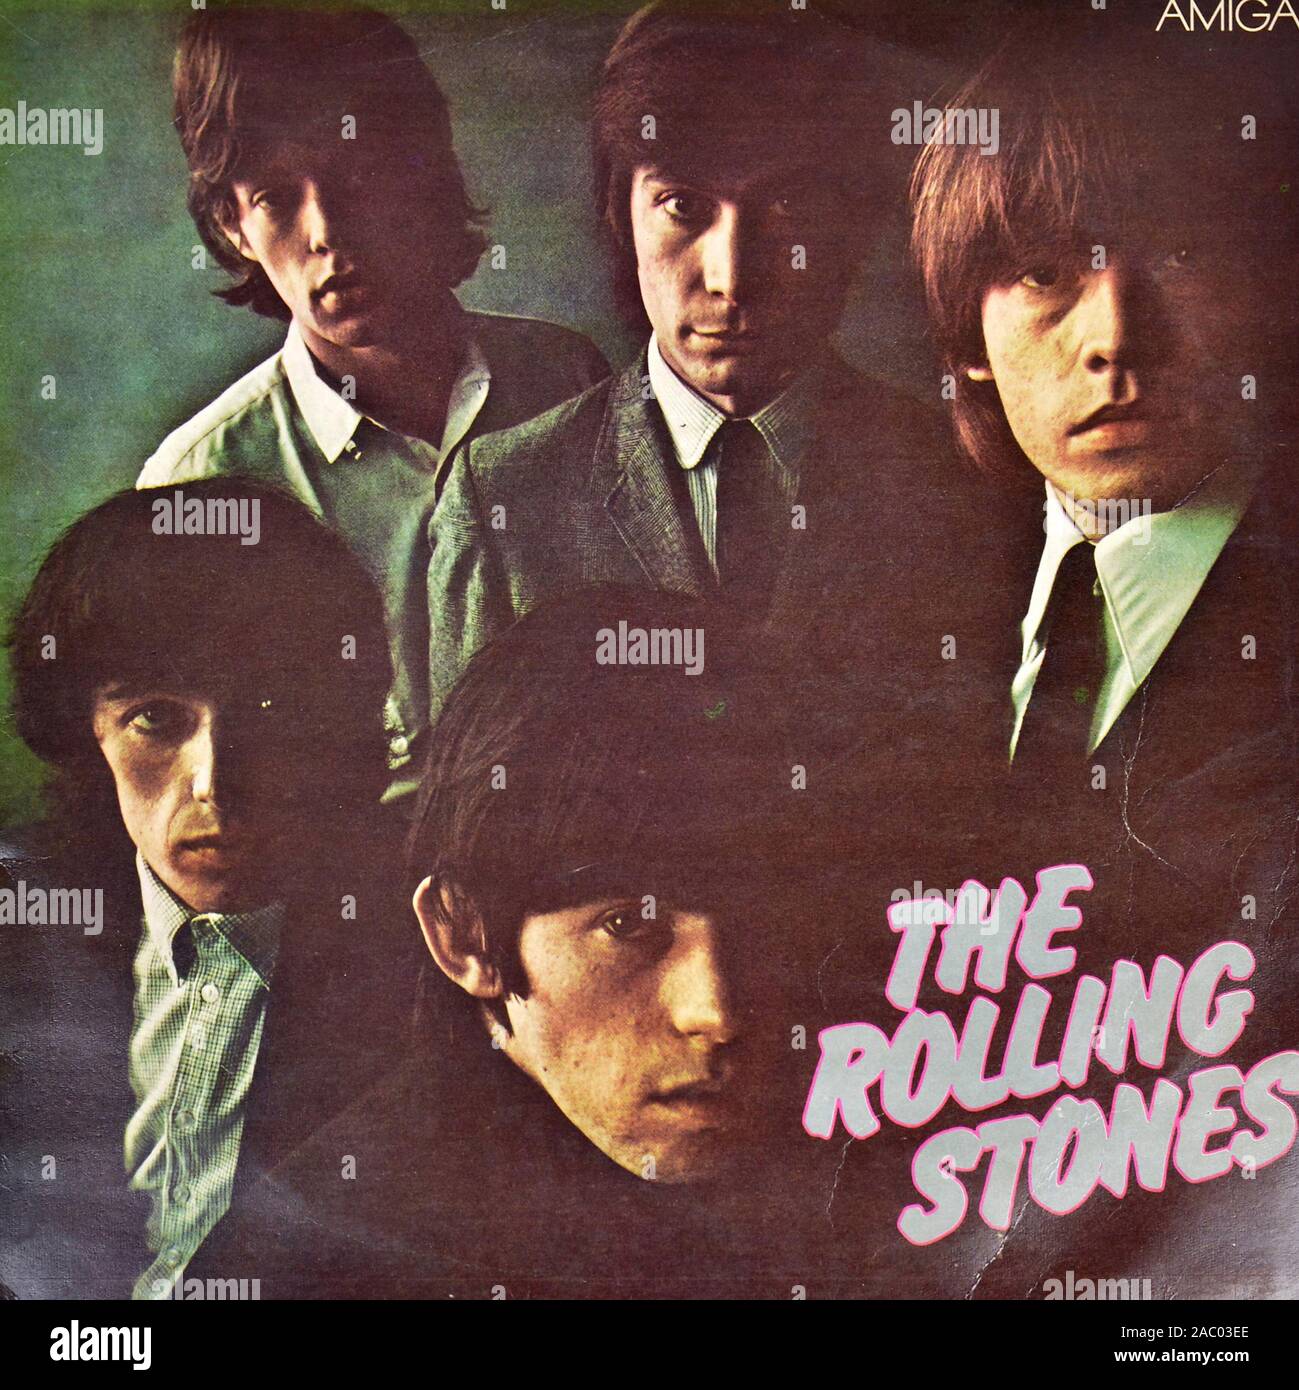 ROLLING STONES The Rolling Stones   - Vintage vinyl album cover Stock Photo